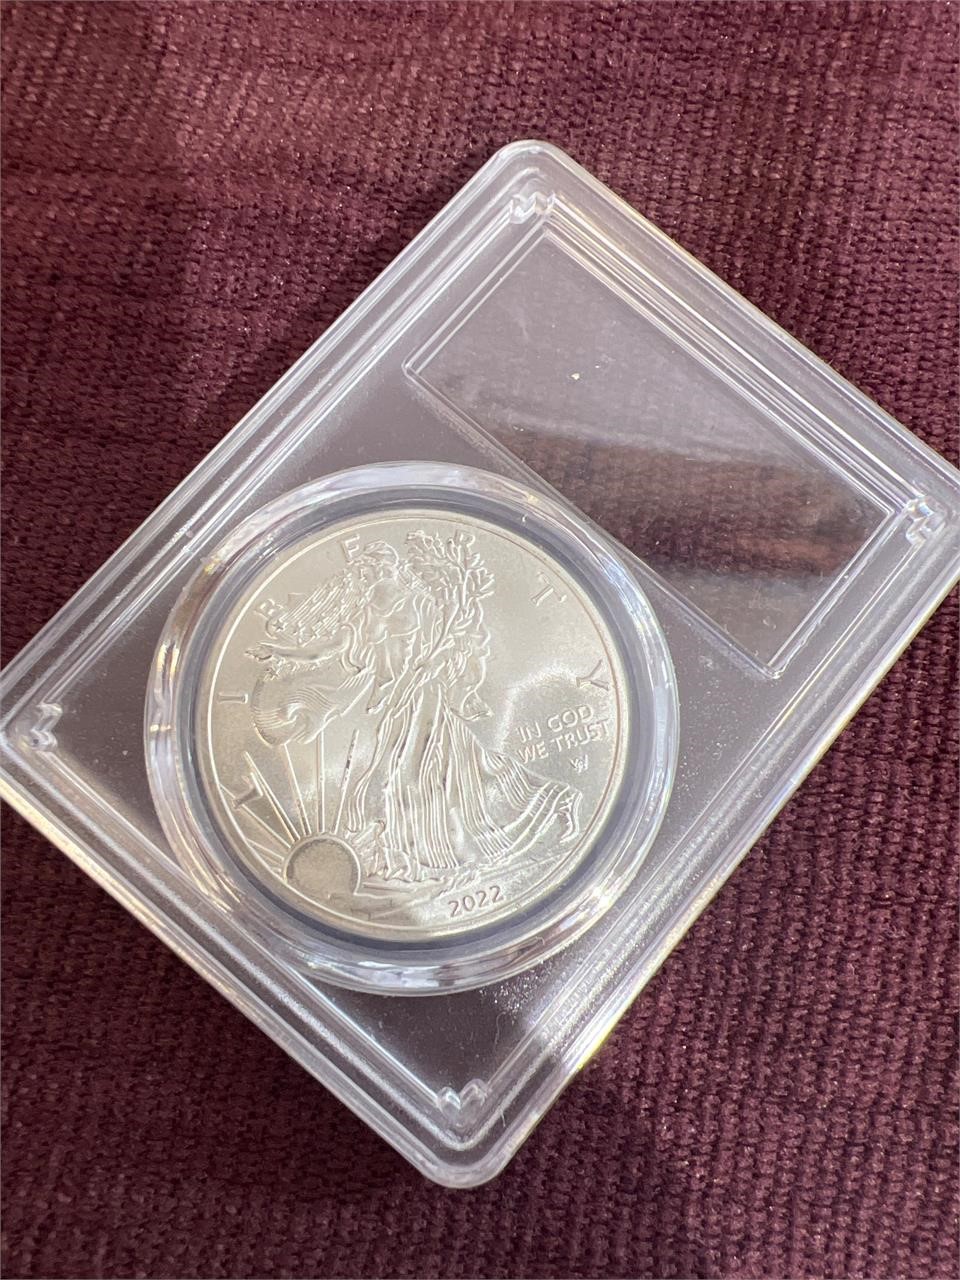 2022 1 ounce silver eagle